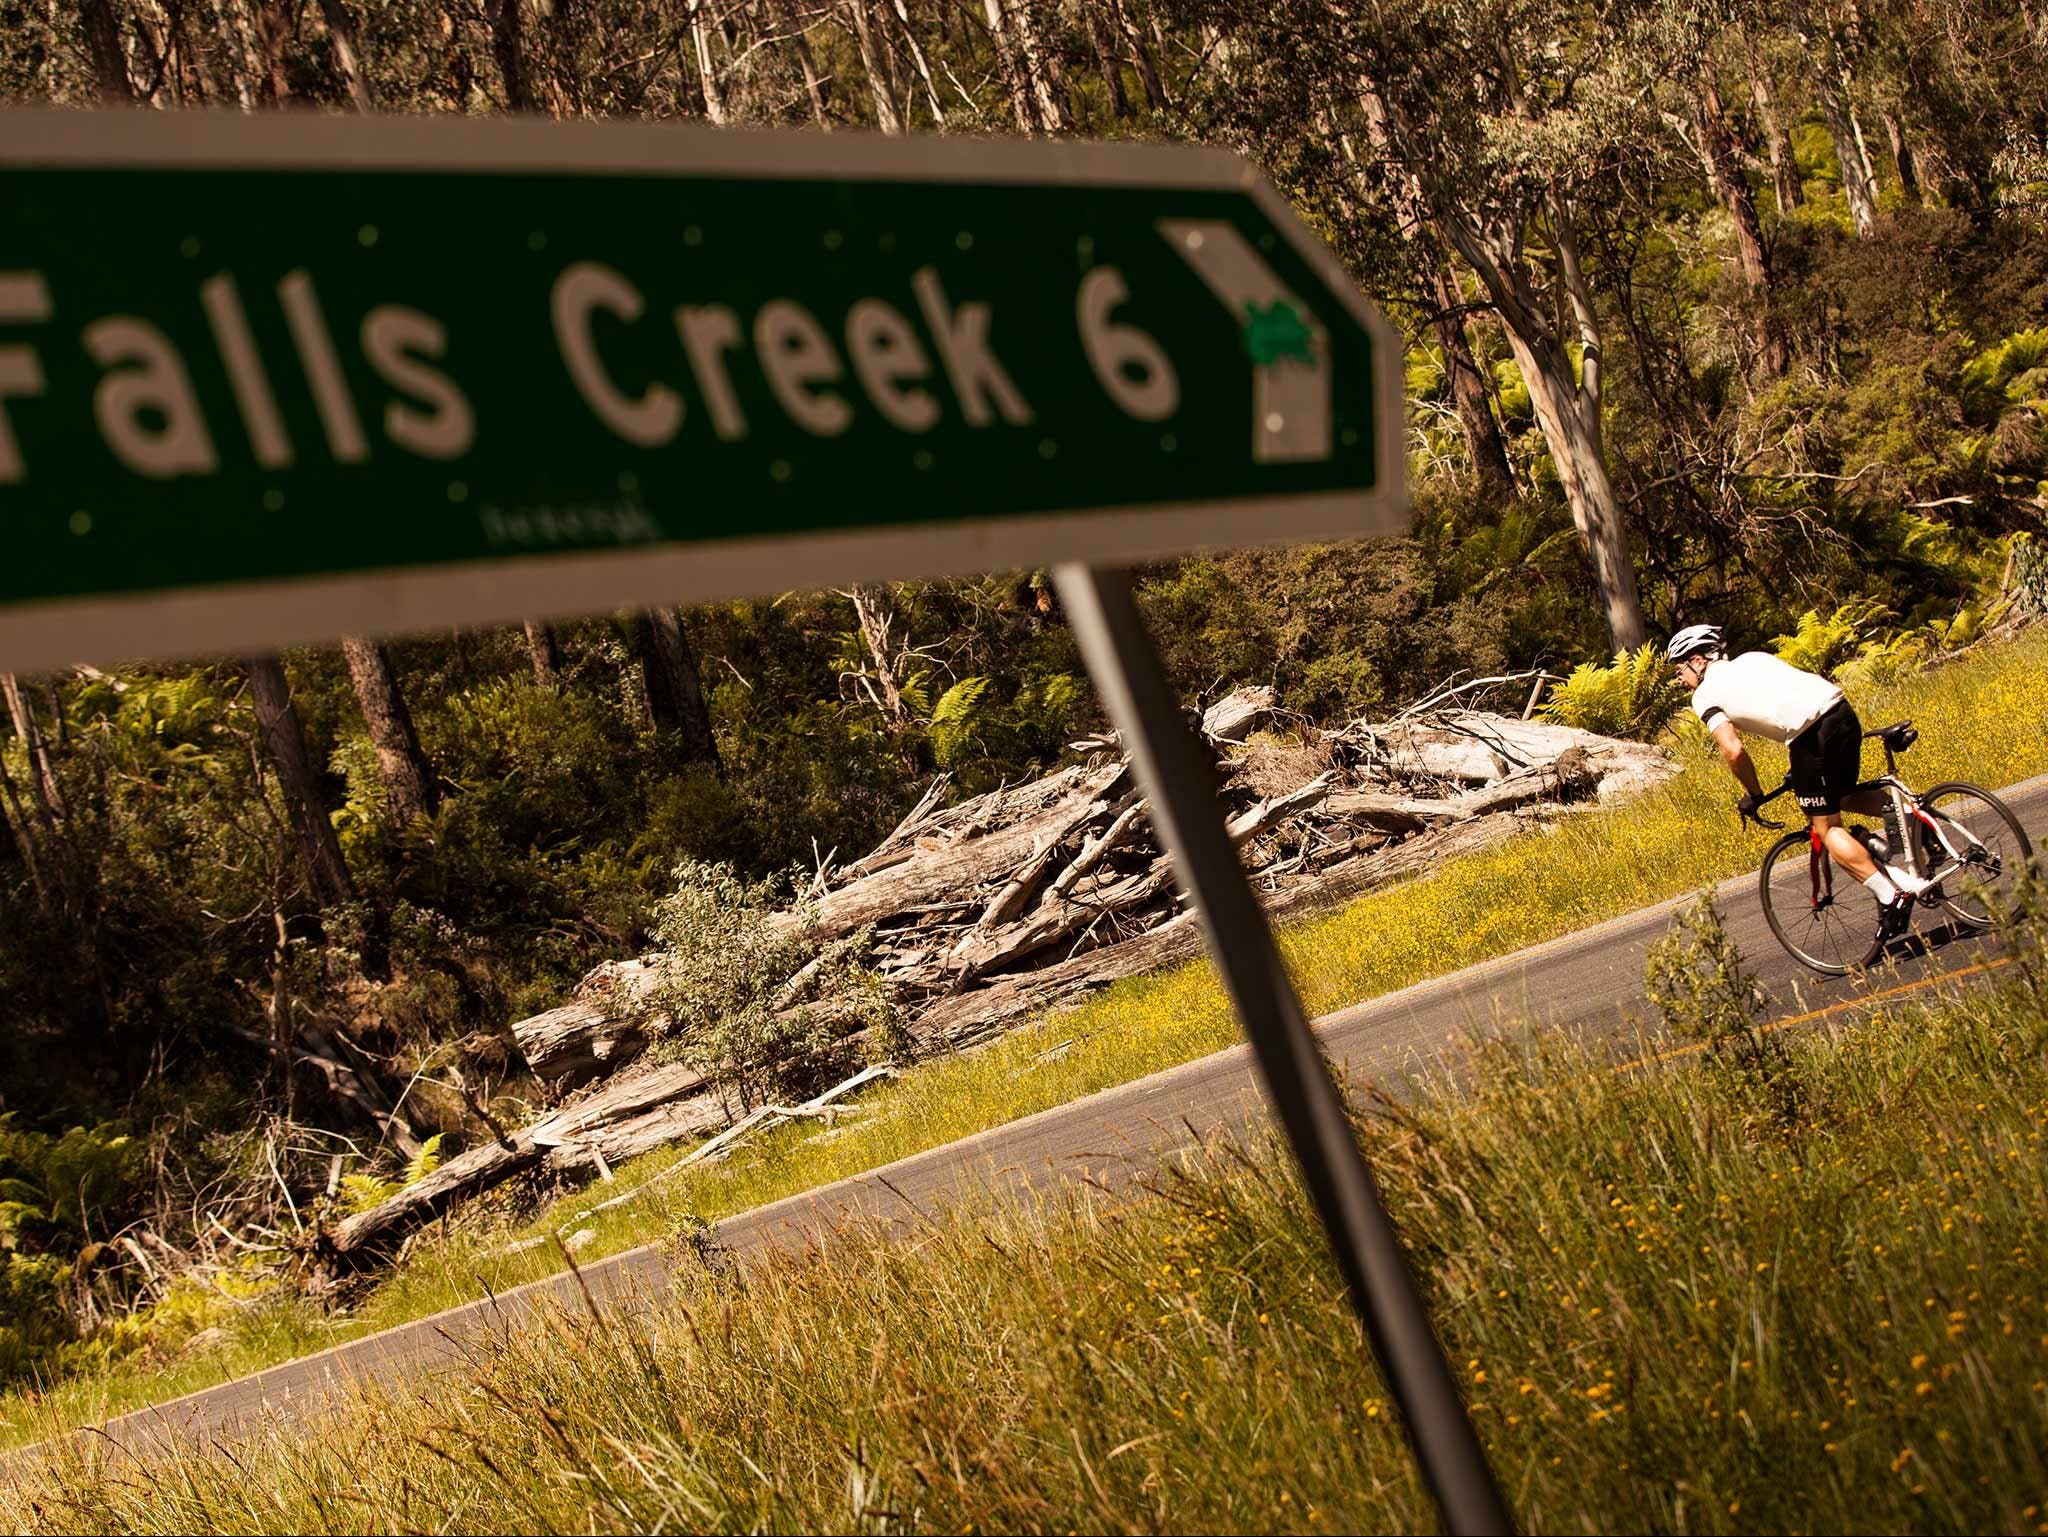 7 Peaks Ride - Falls Creek - Tourism Cairns